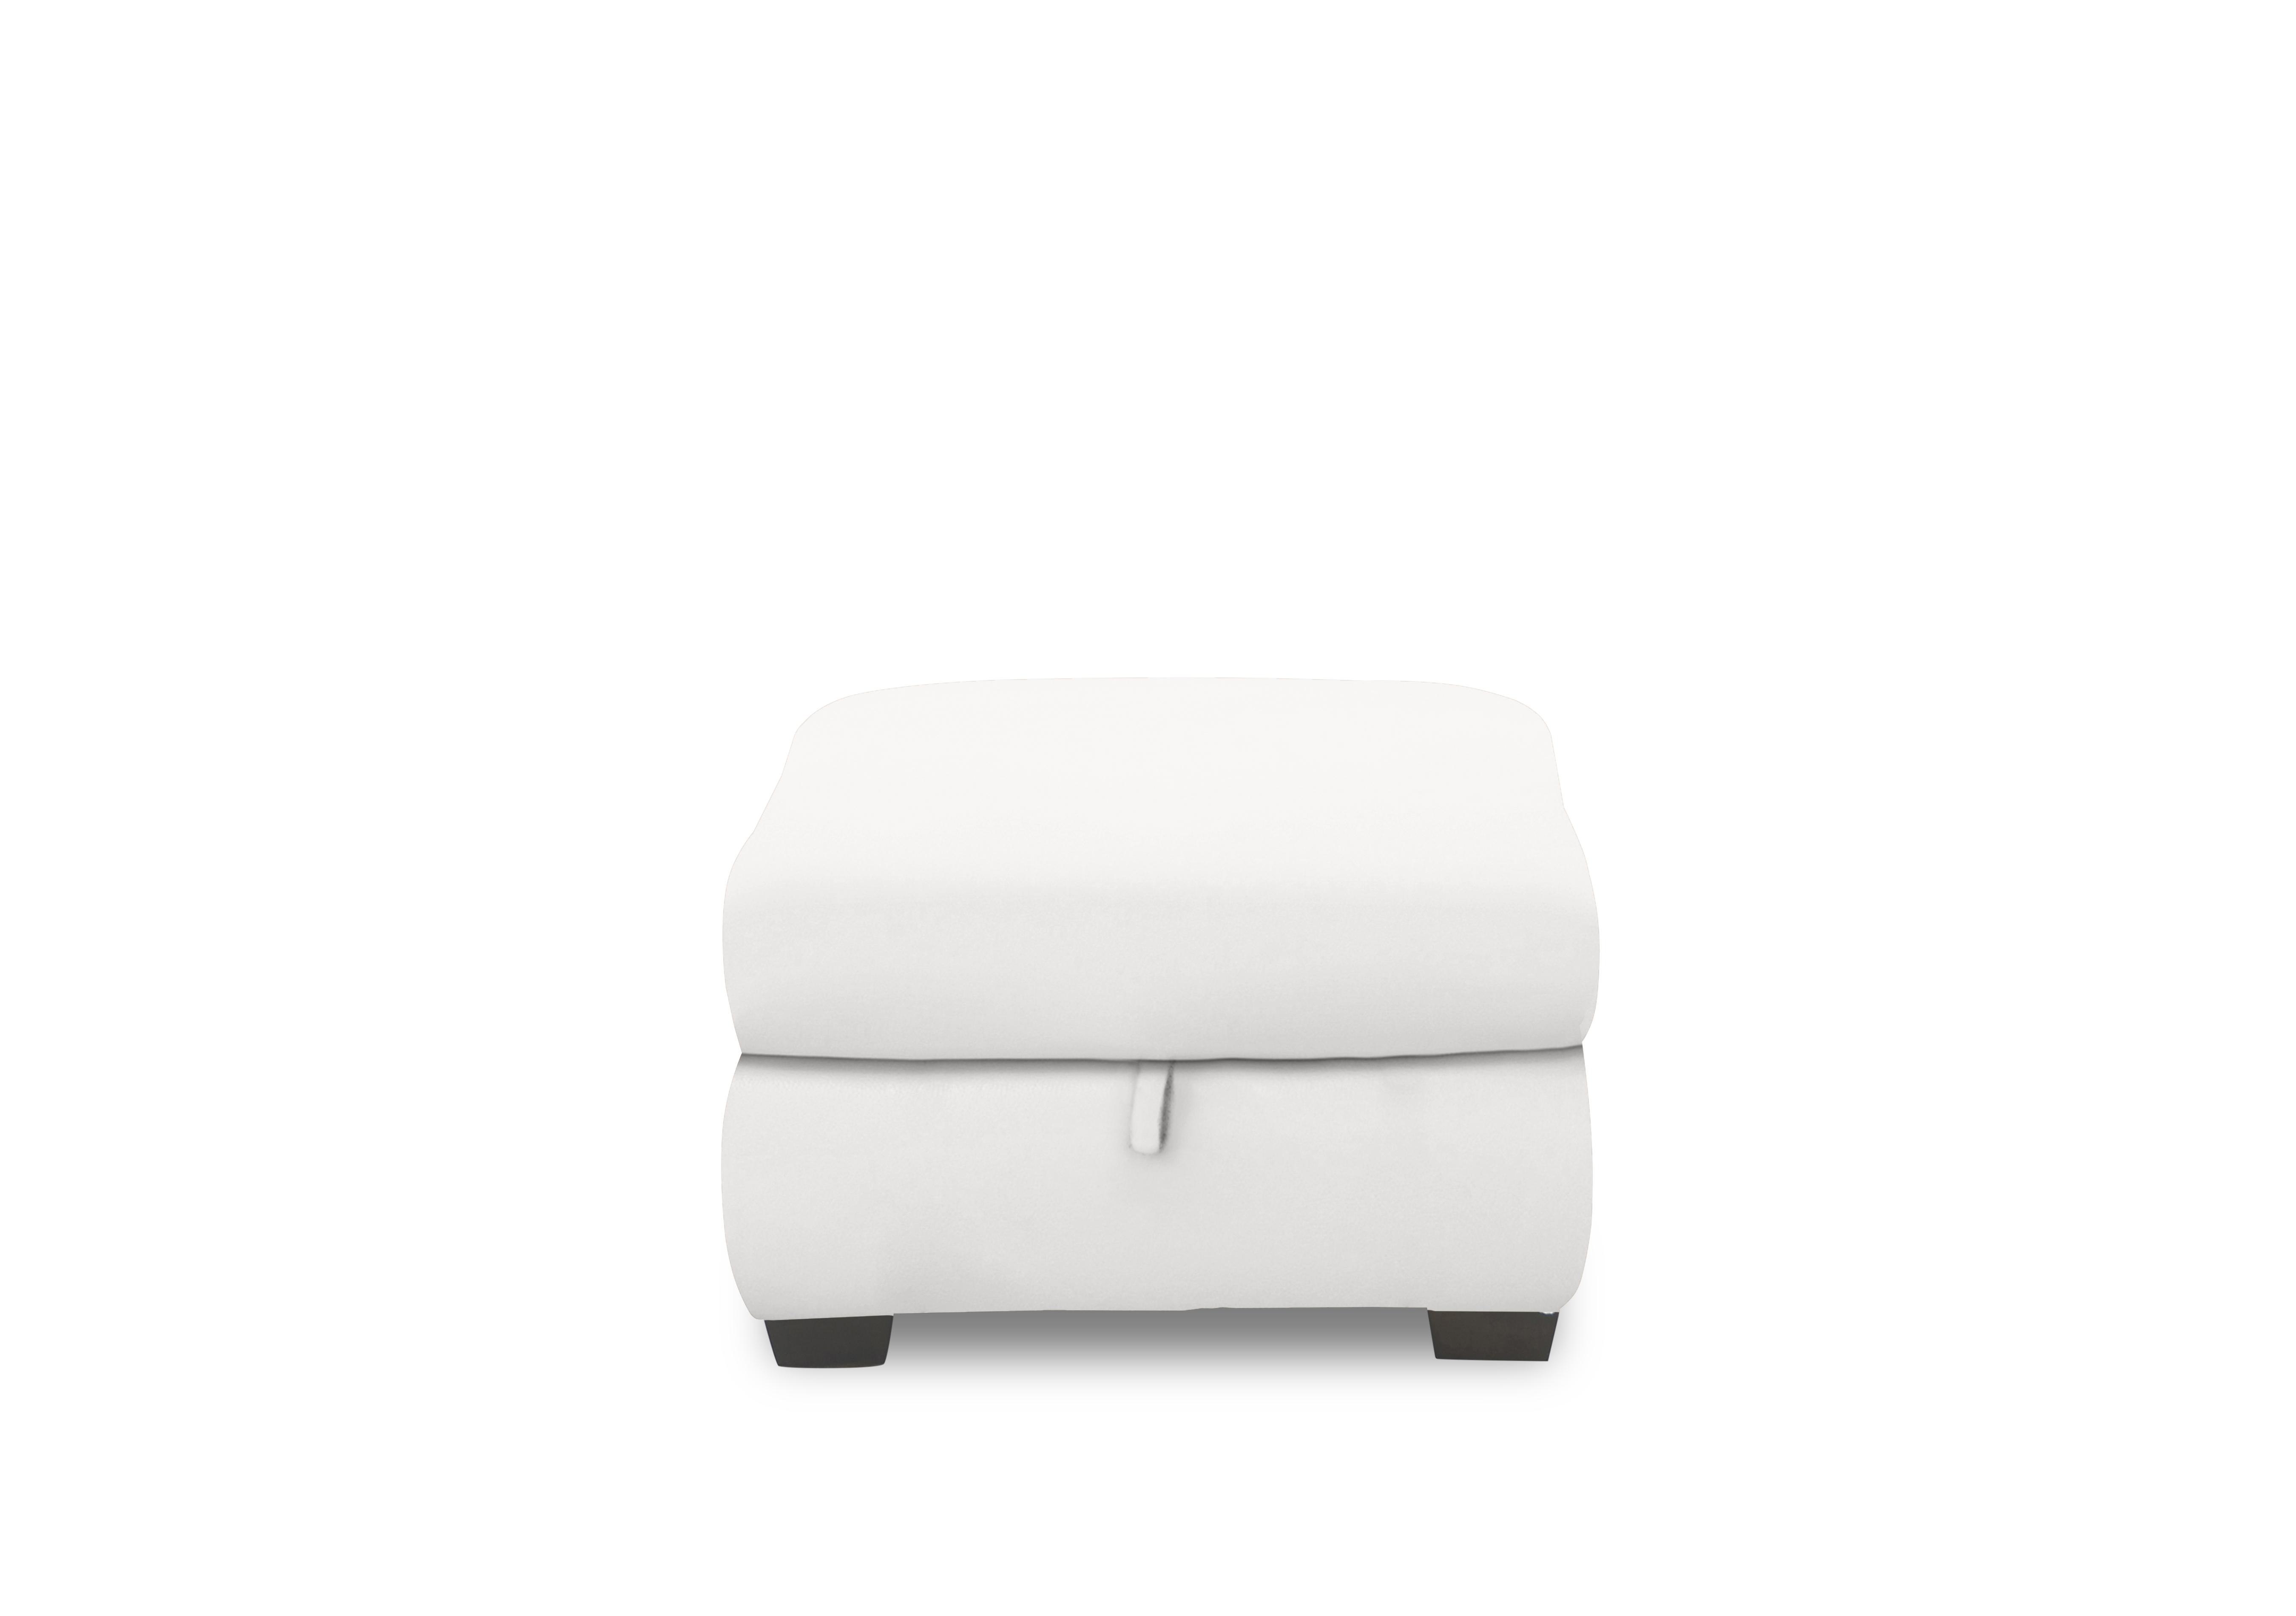 Nixon Leather Storage Footstool in Bv-744d Star White on Furniture Village